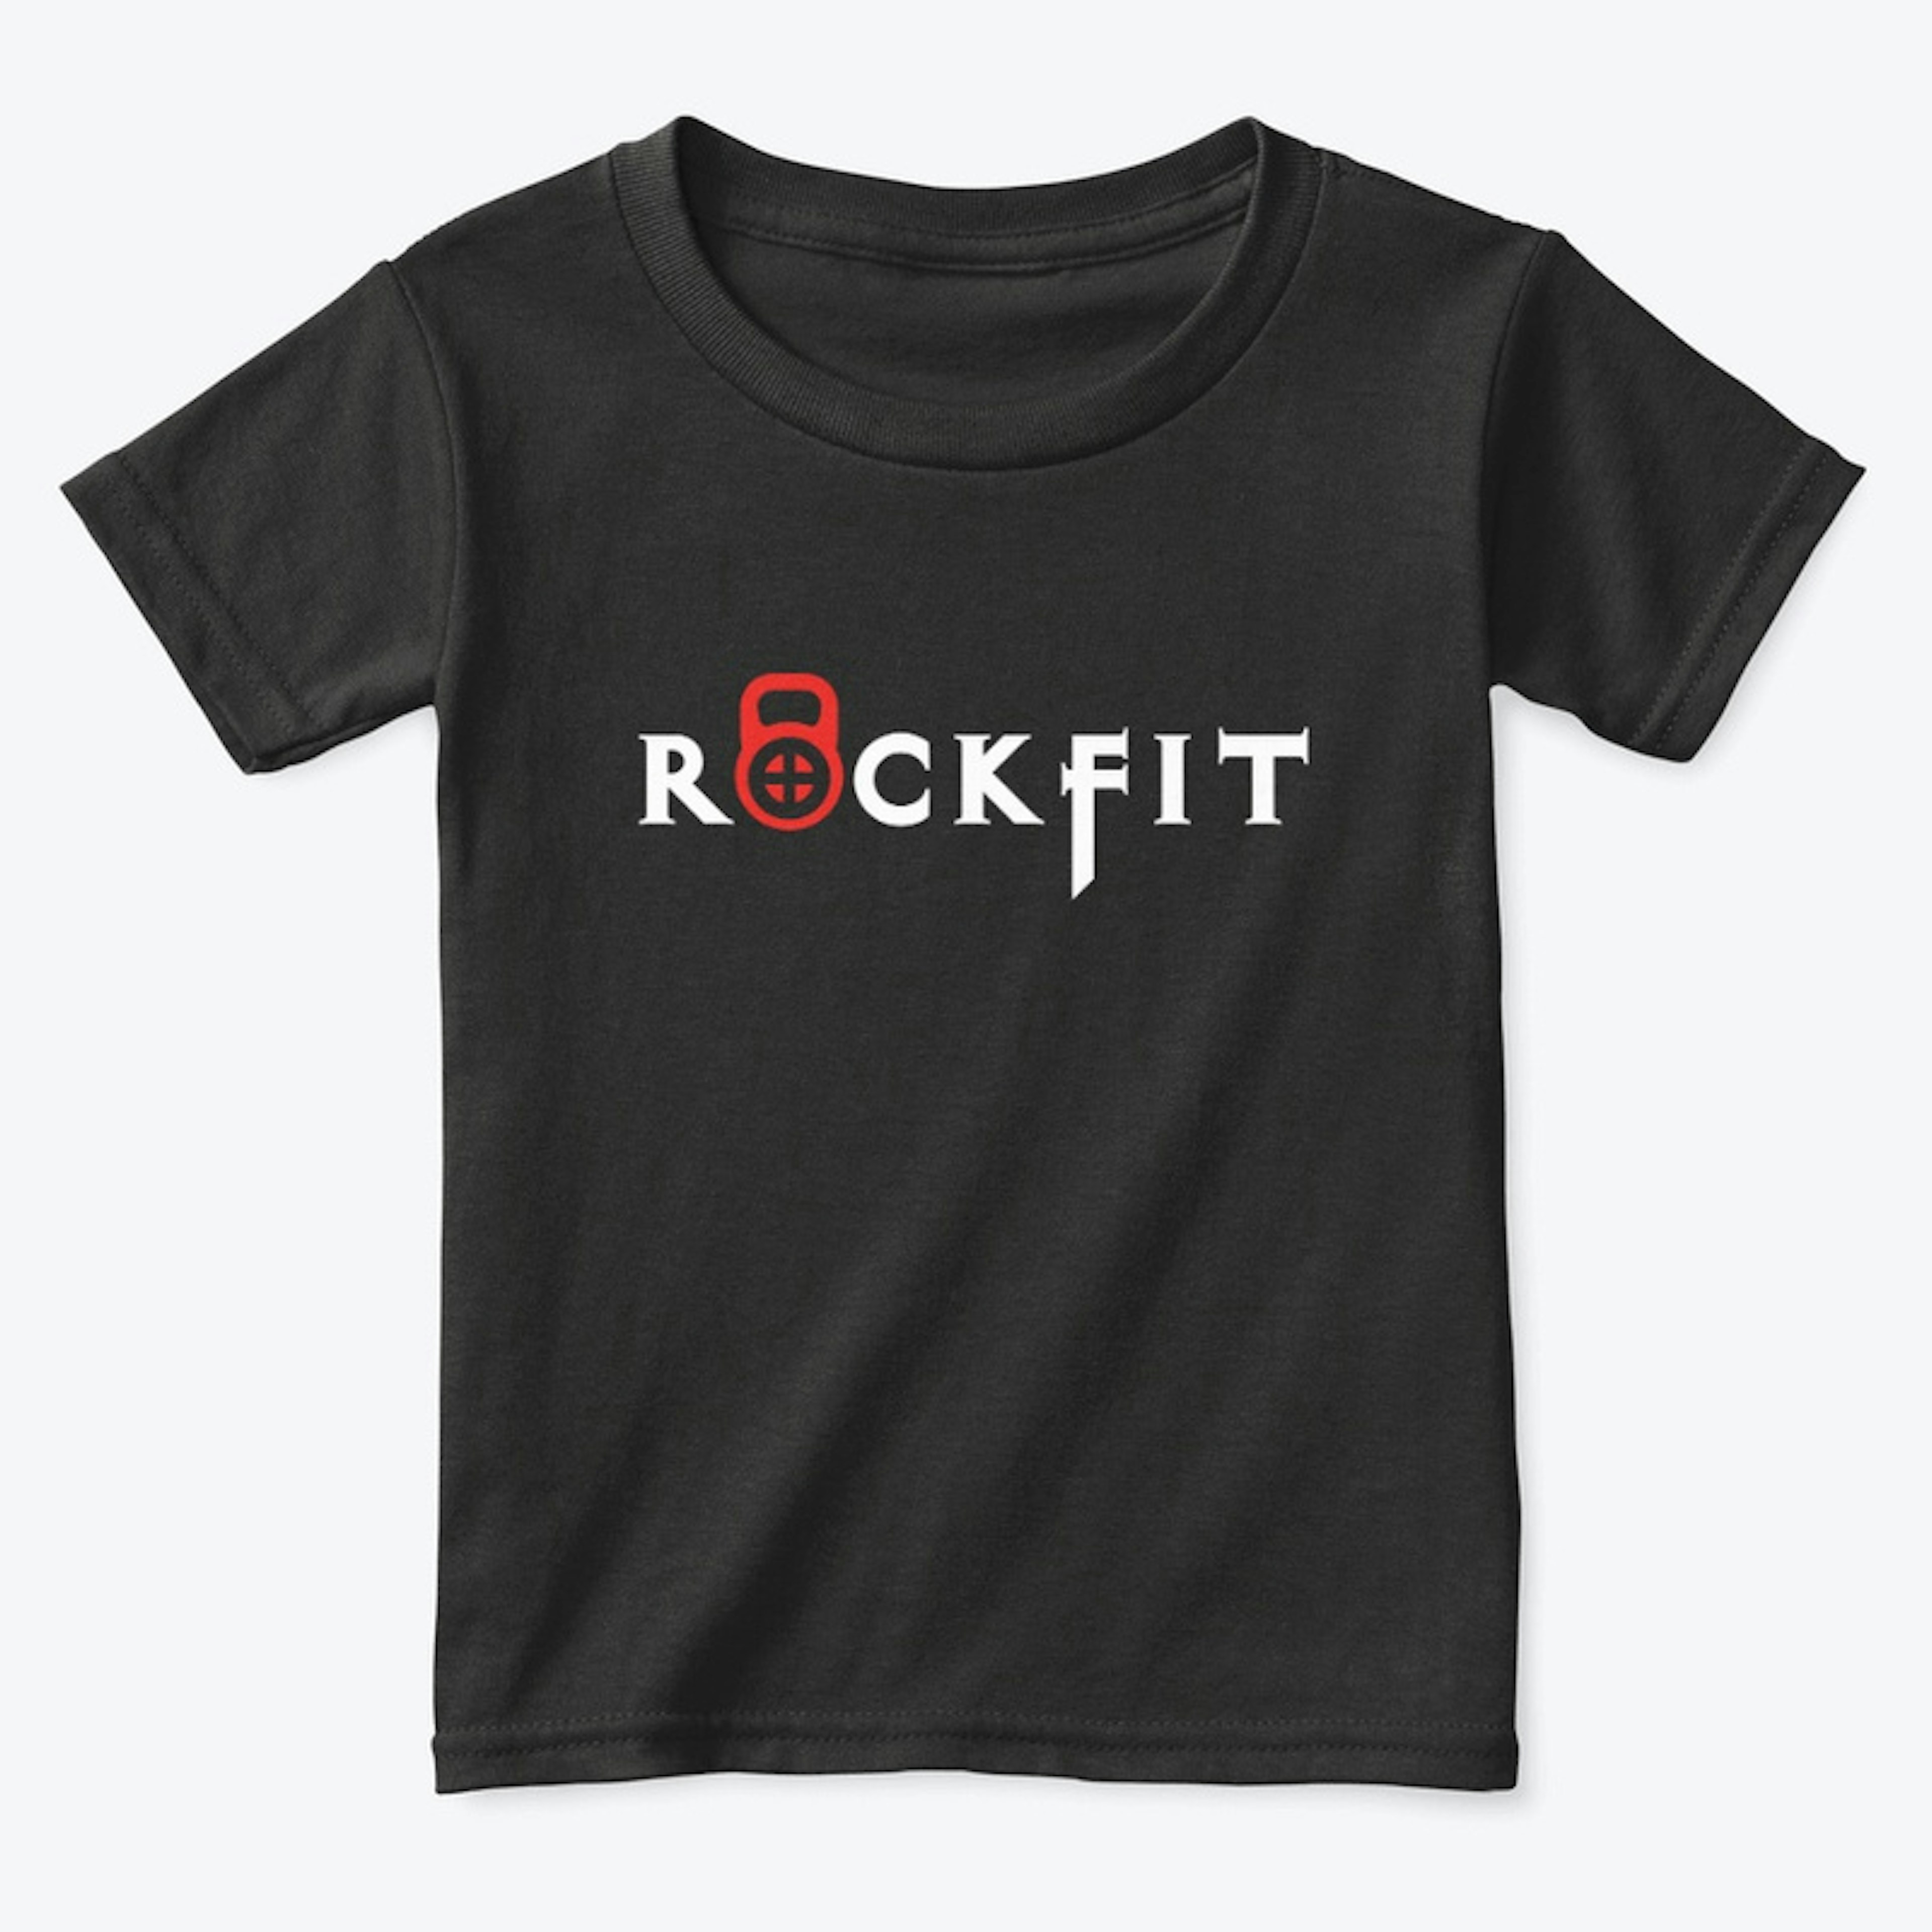 Rockfit Toddler Black Shirt